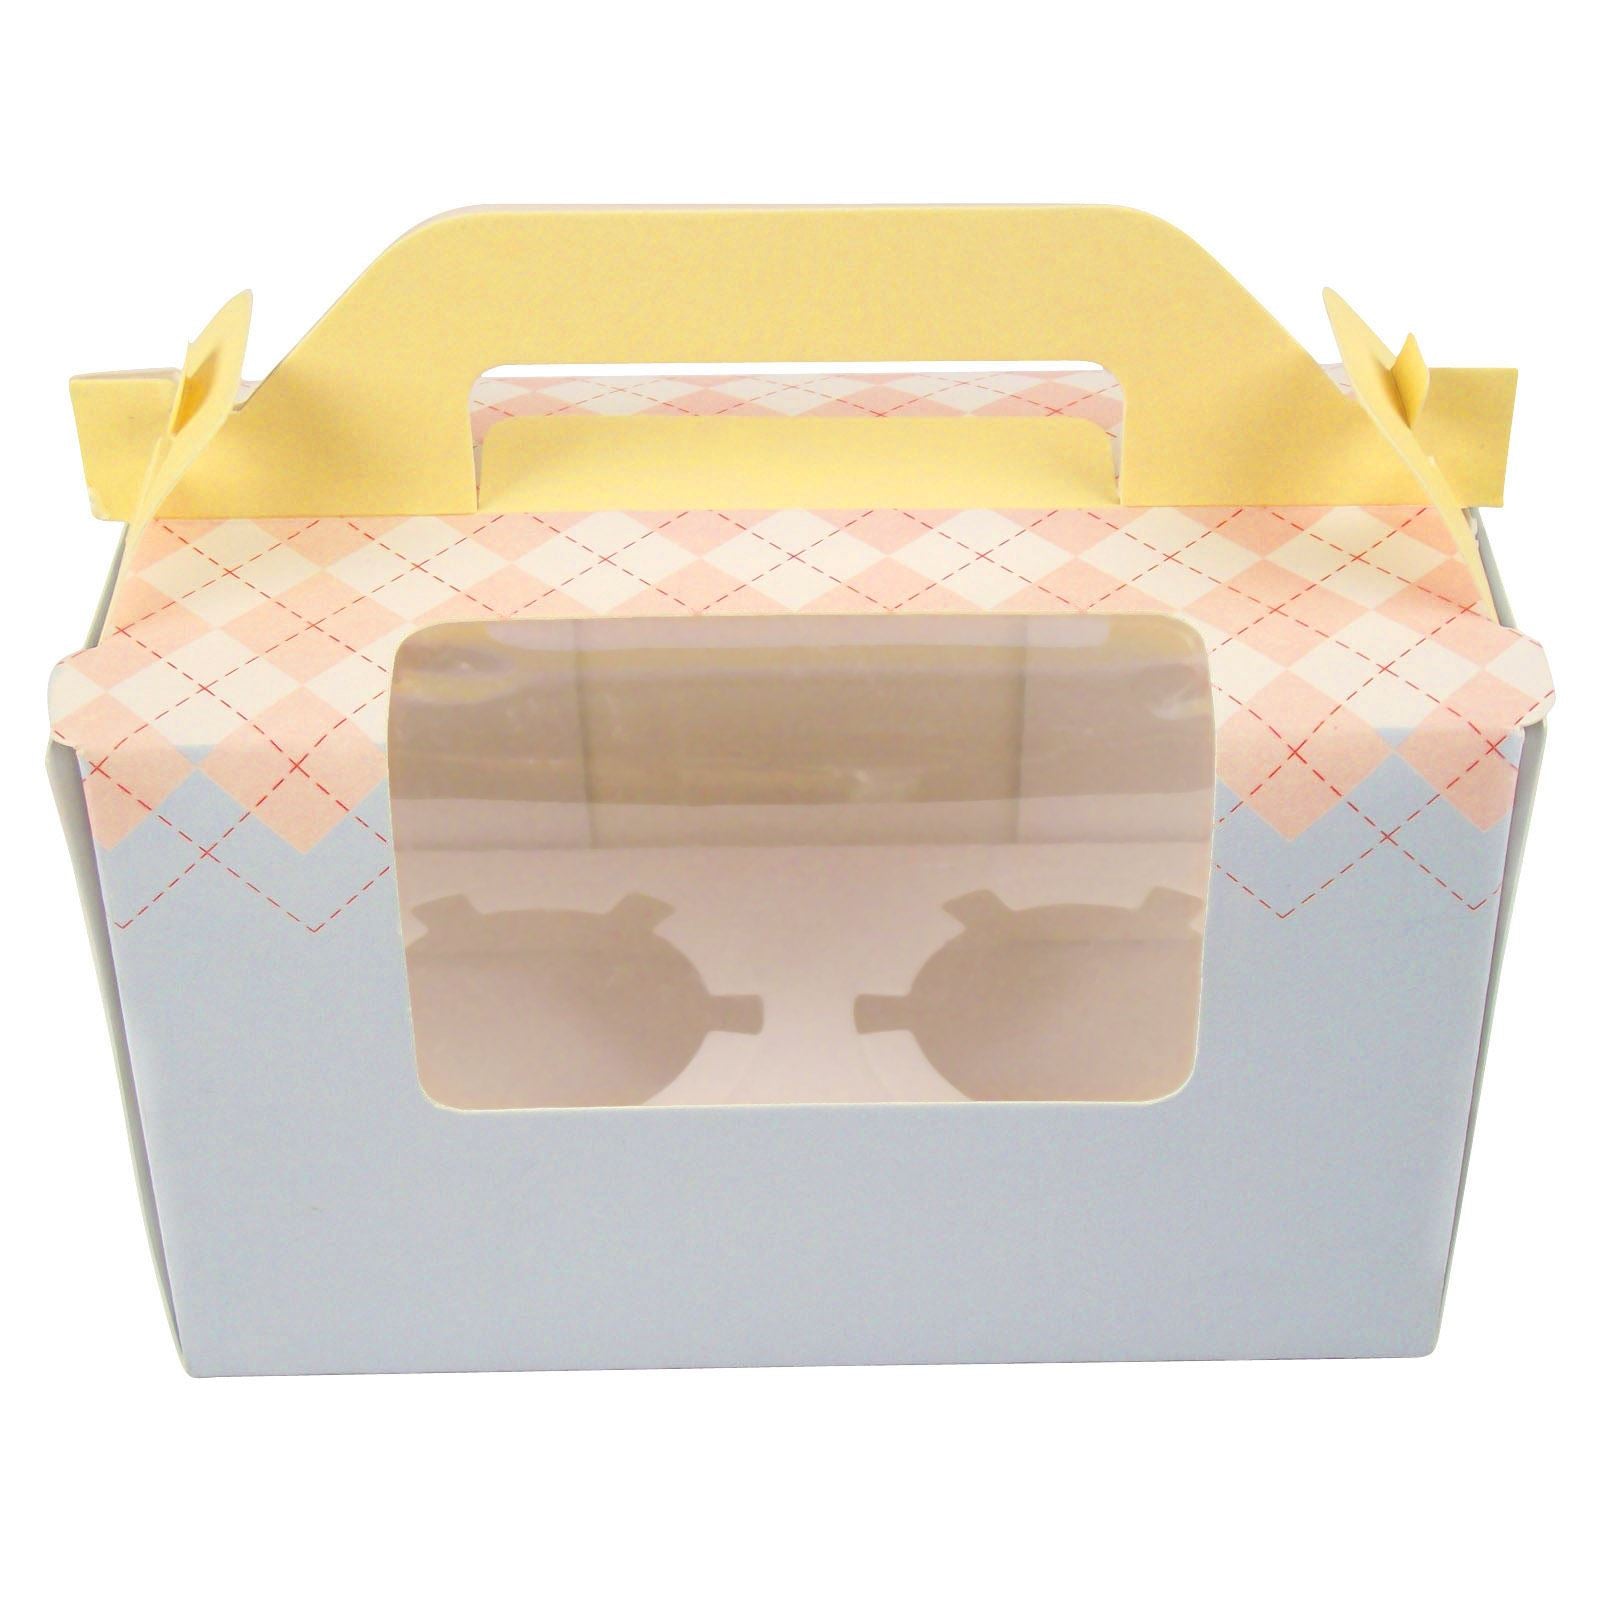 2 Cupcake Vintage Box with Handle